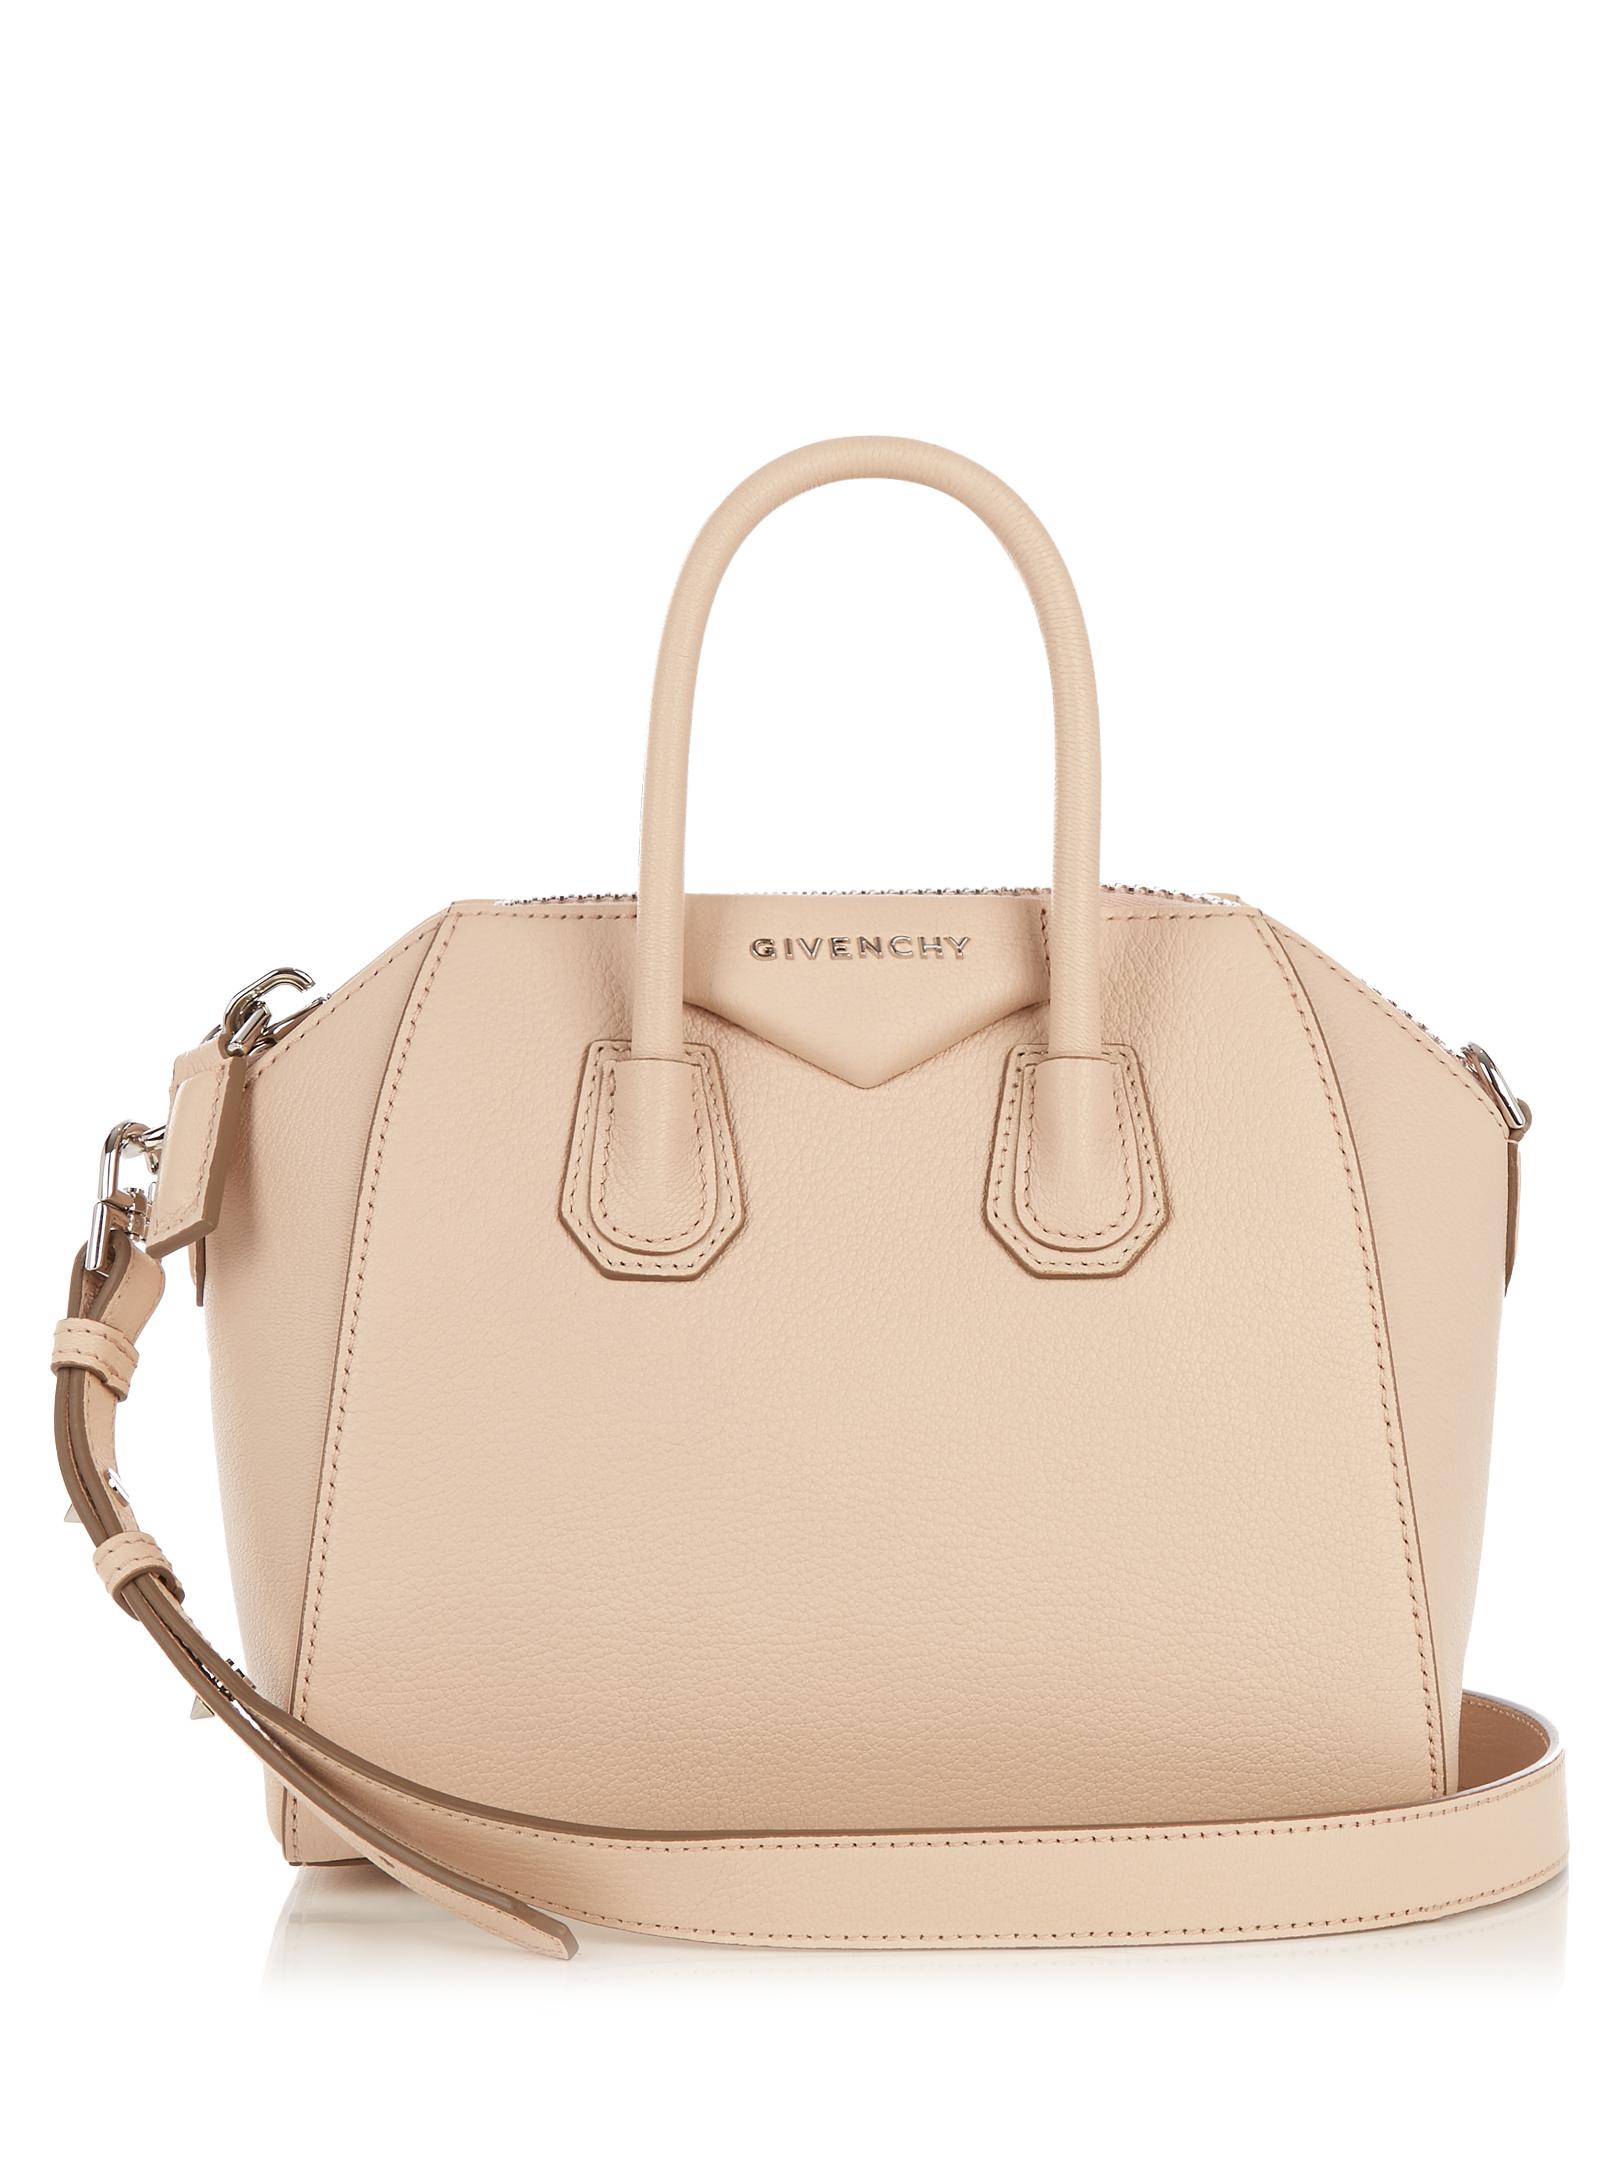 Lyst - Givenchy Antigona Mini Leather Cross-body Bag in Pink